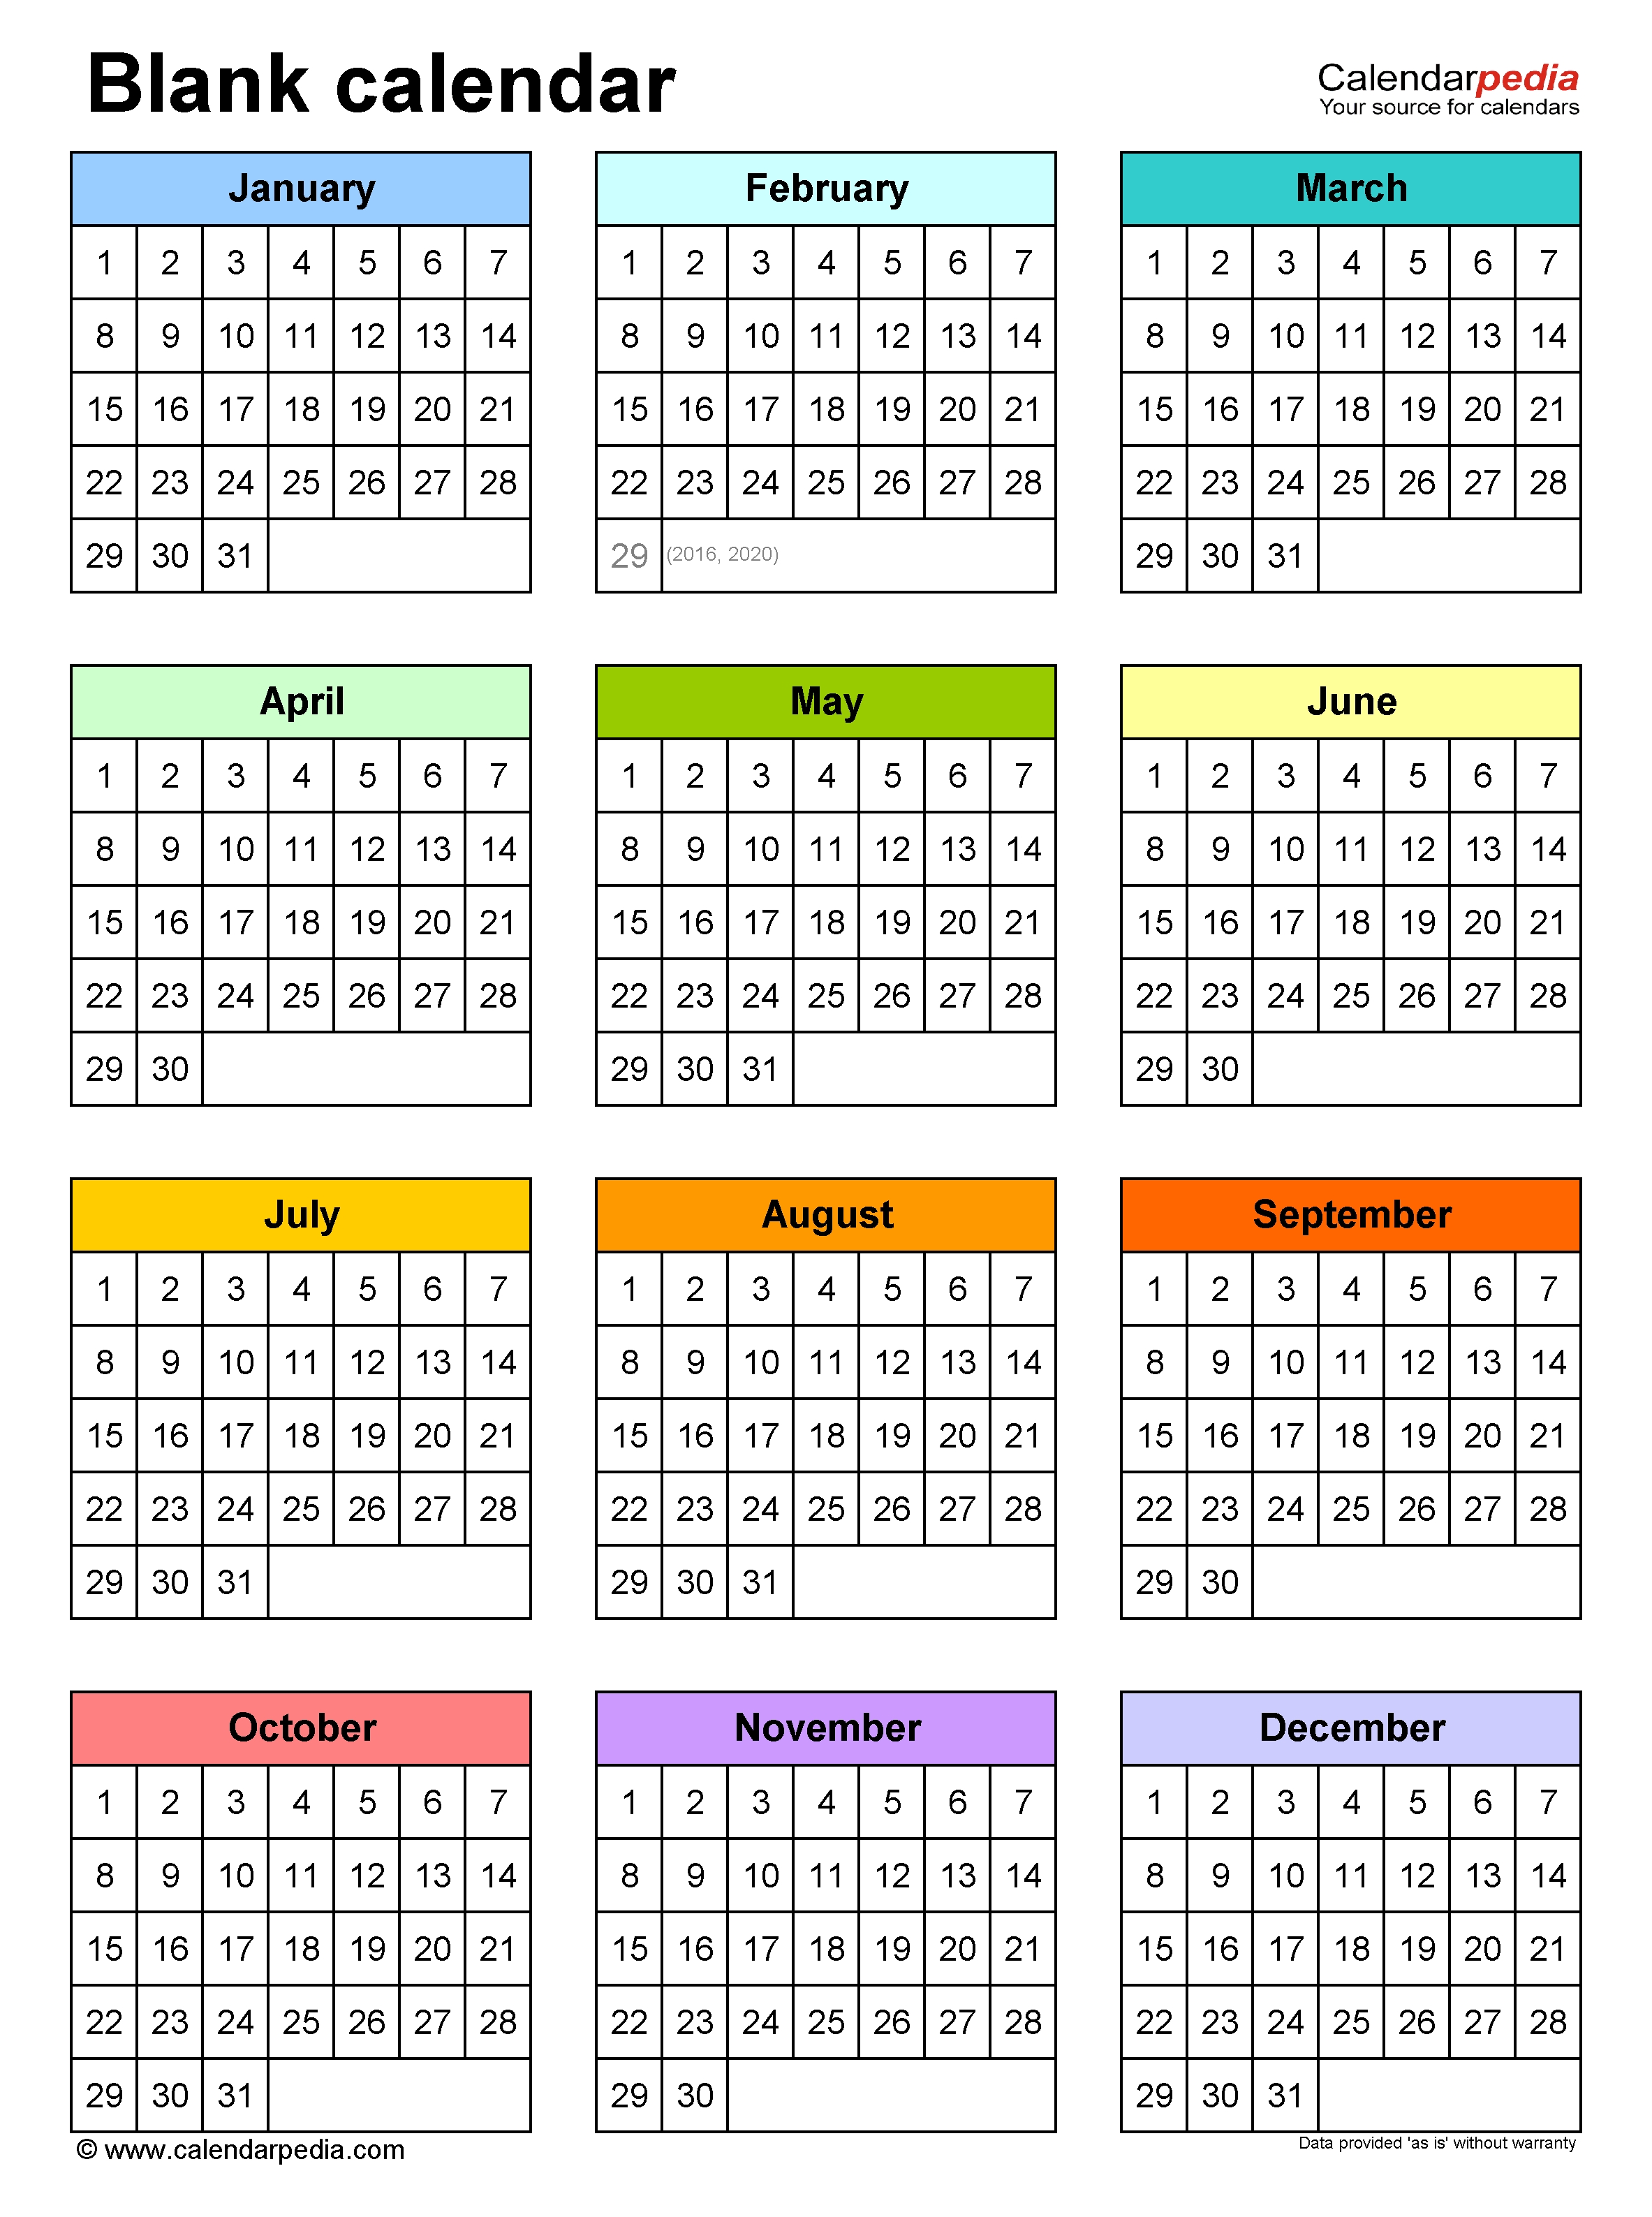 Blank Calendars - Free Printable Microsoft Word Templates